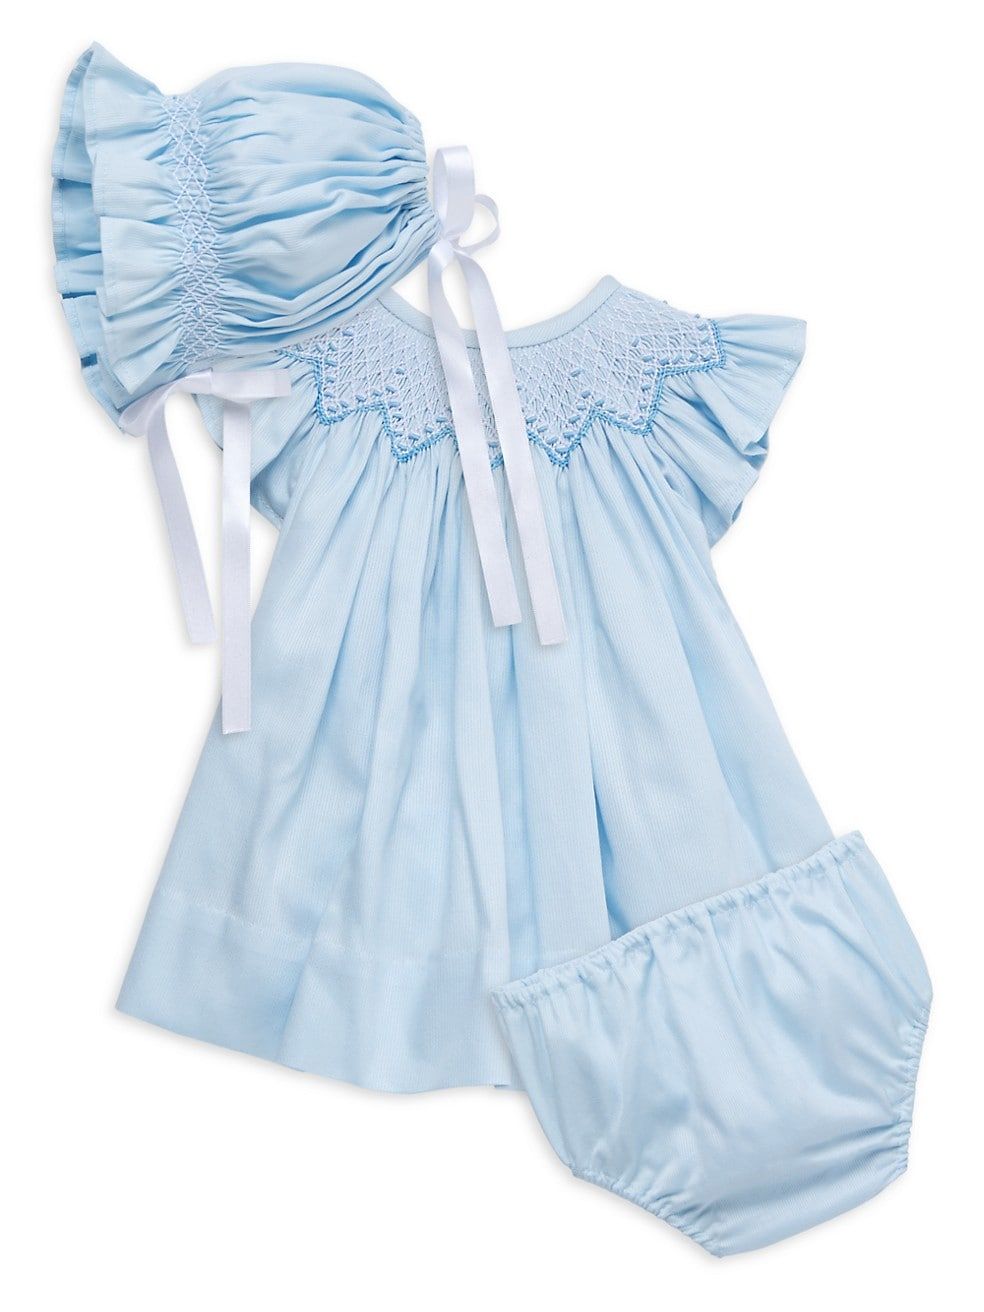 Baby Girl's Bishop Pique Dress, Bonnet & Diaper Cover Set